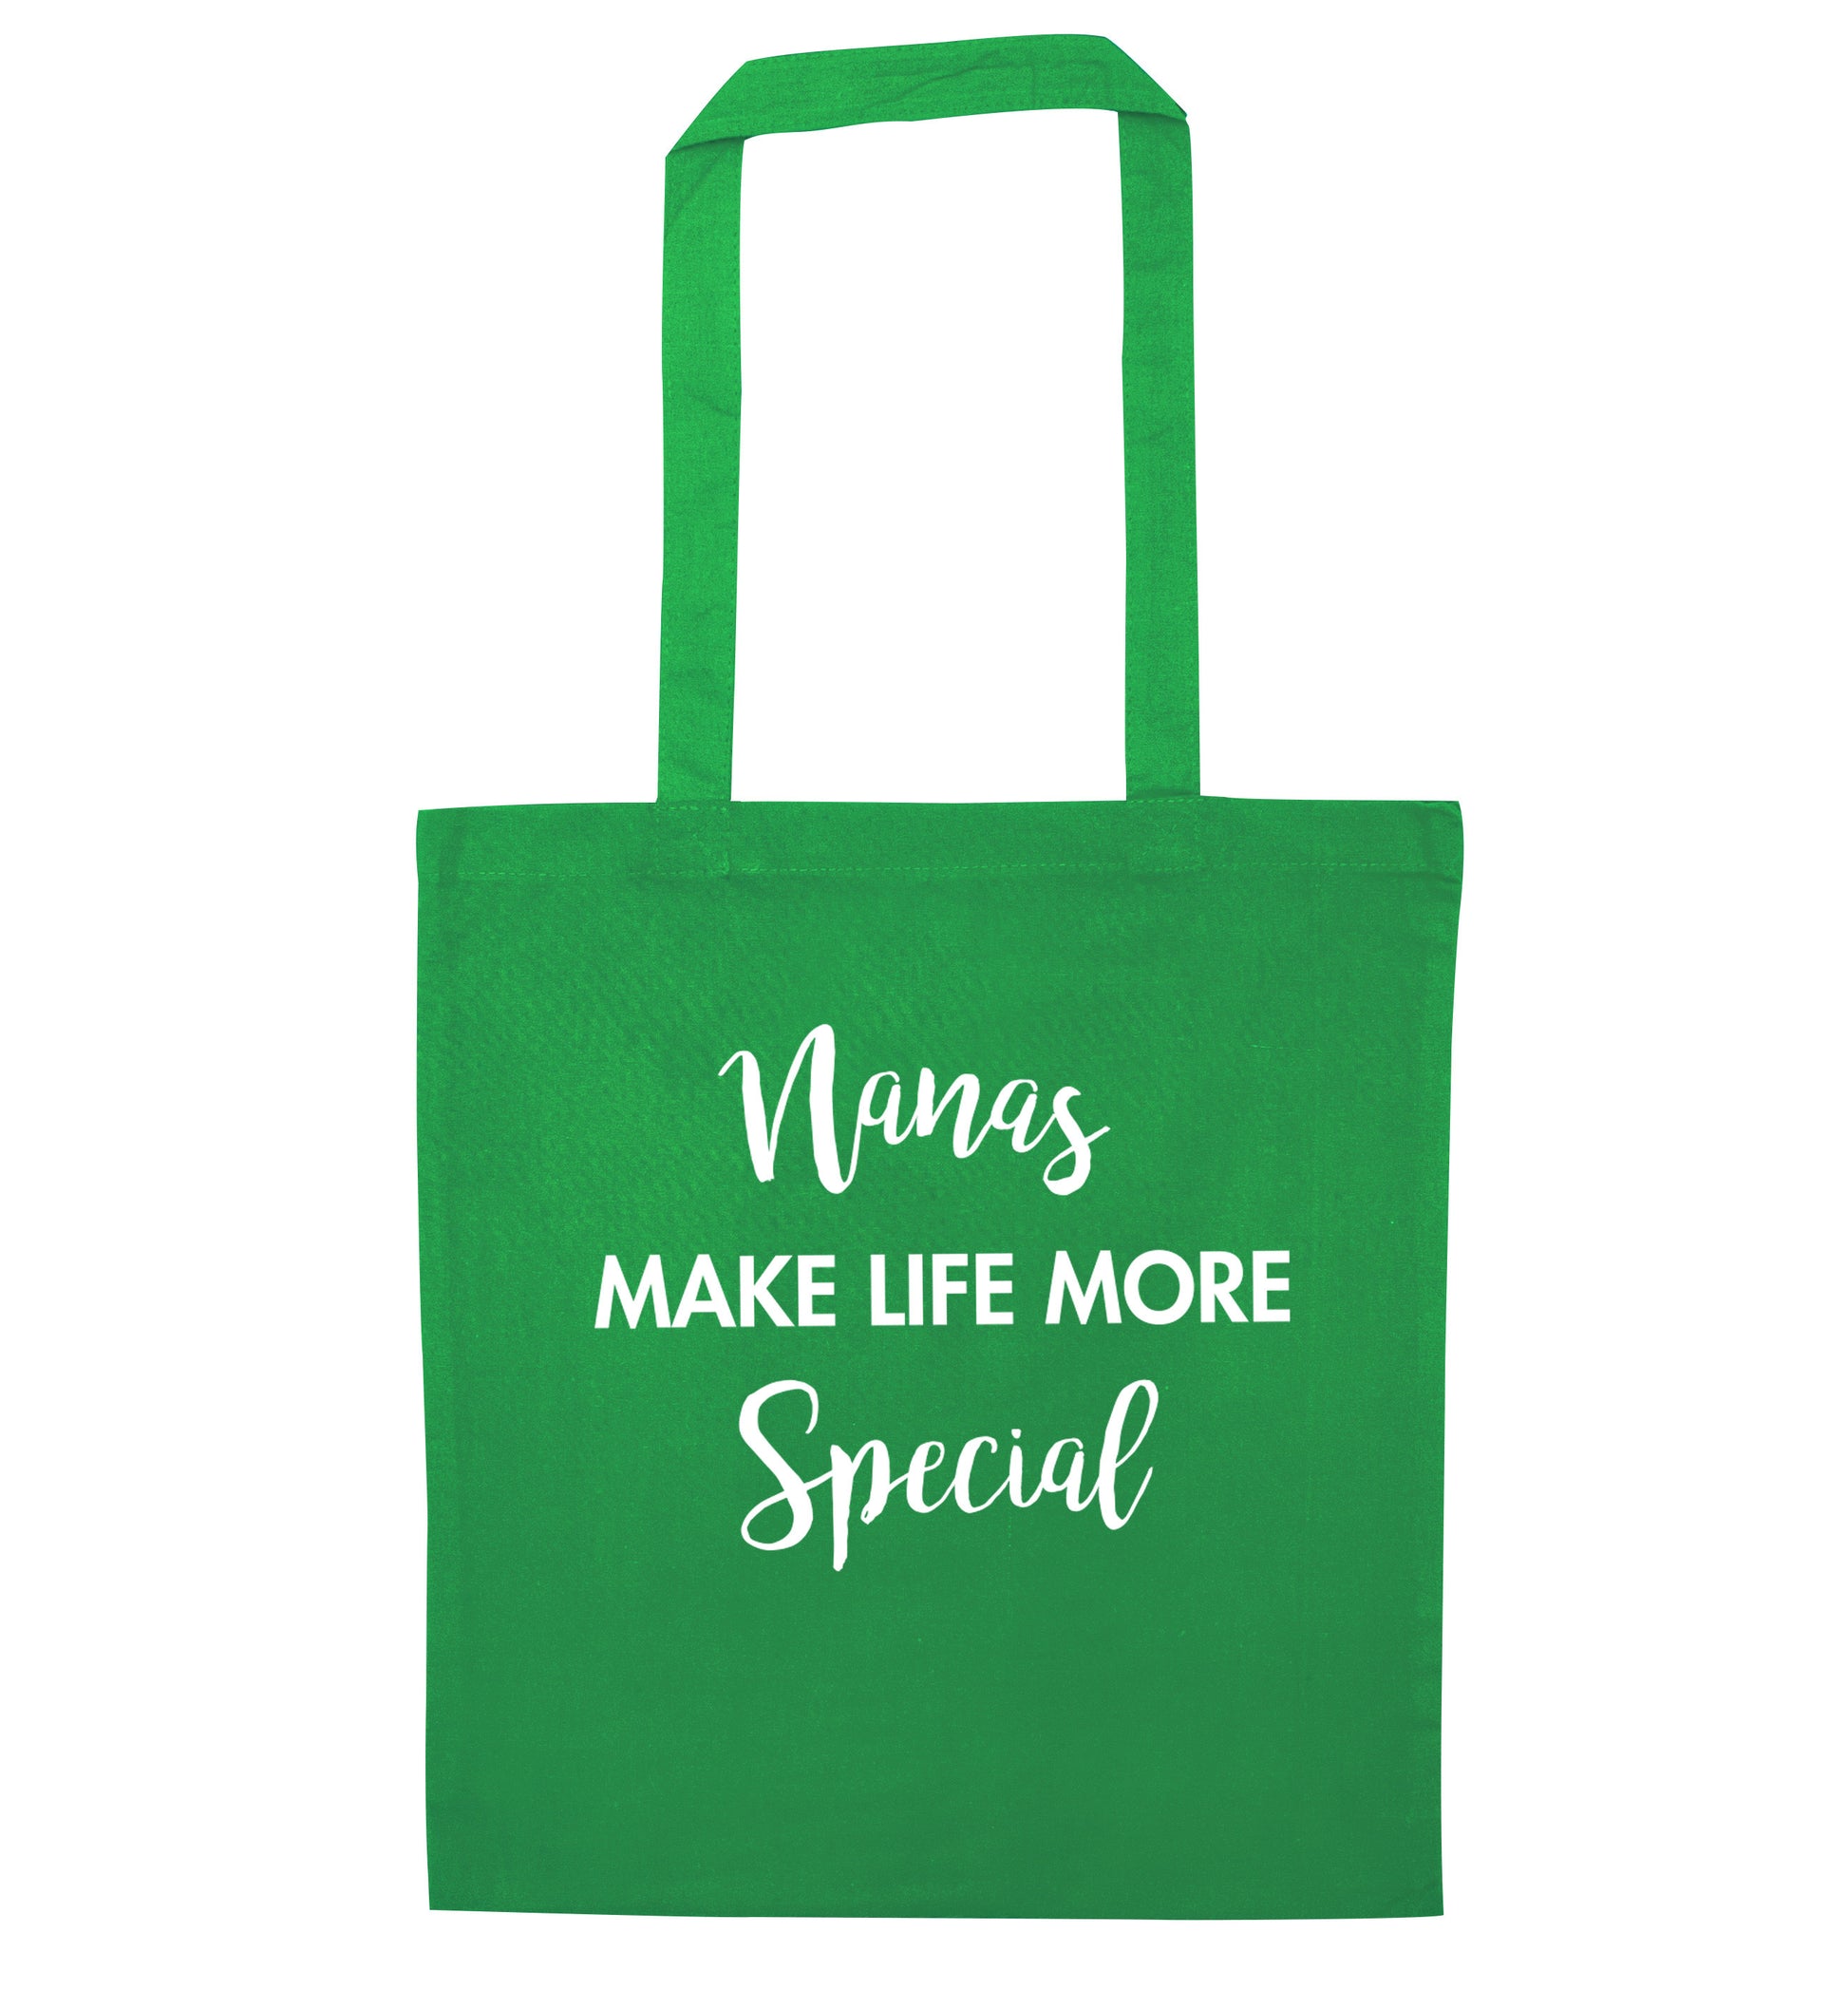 Nanas make life more special green tote bag